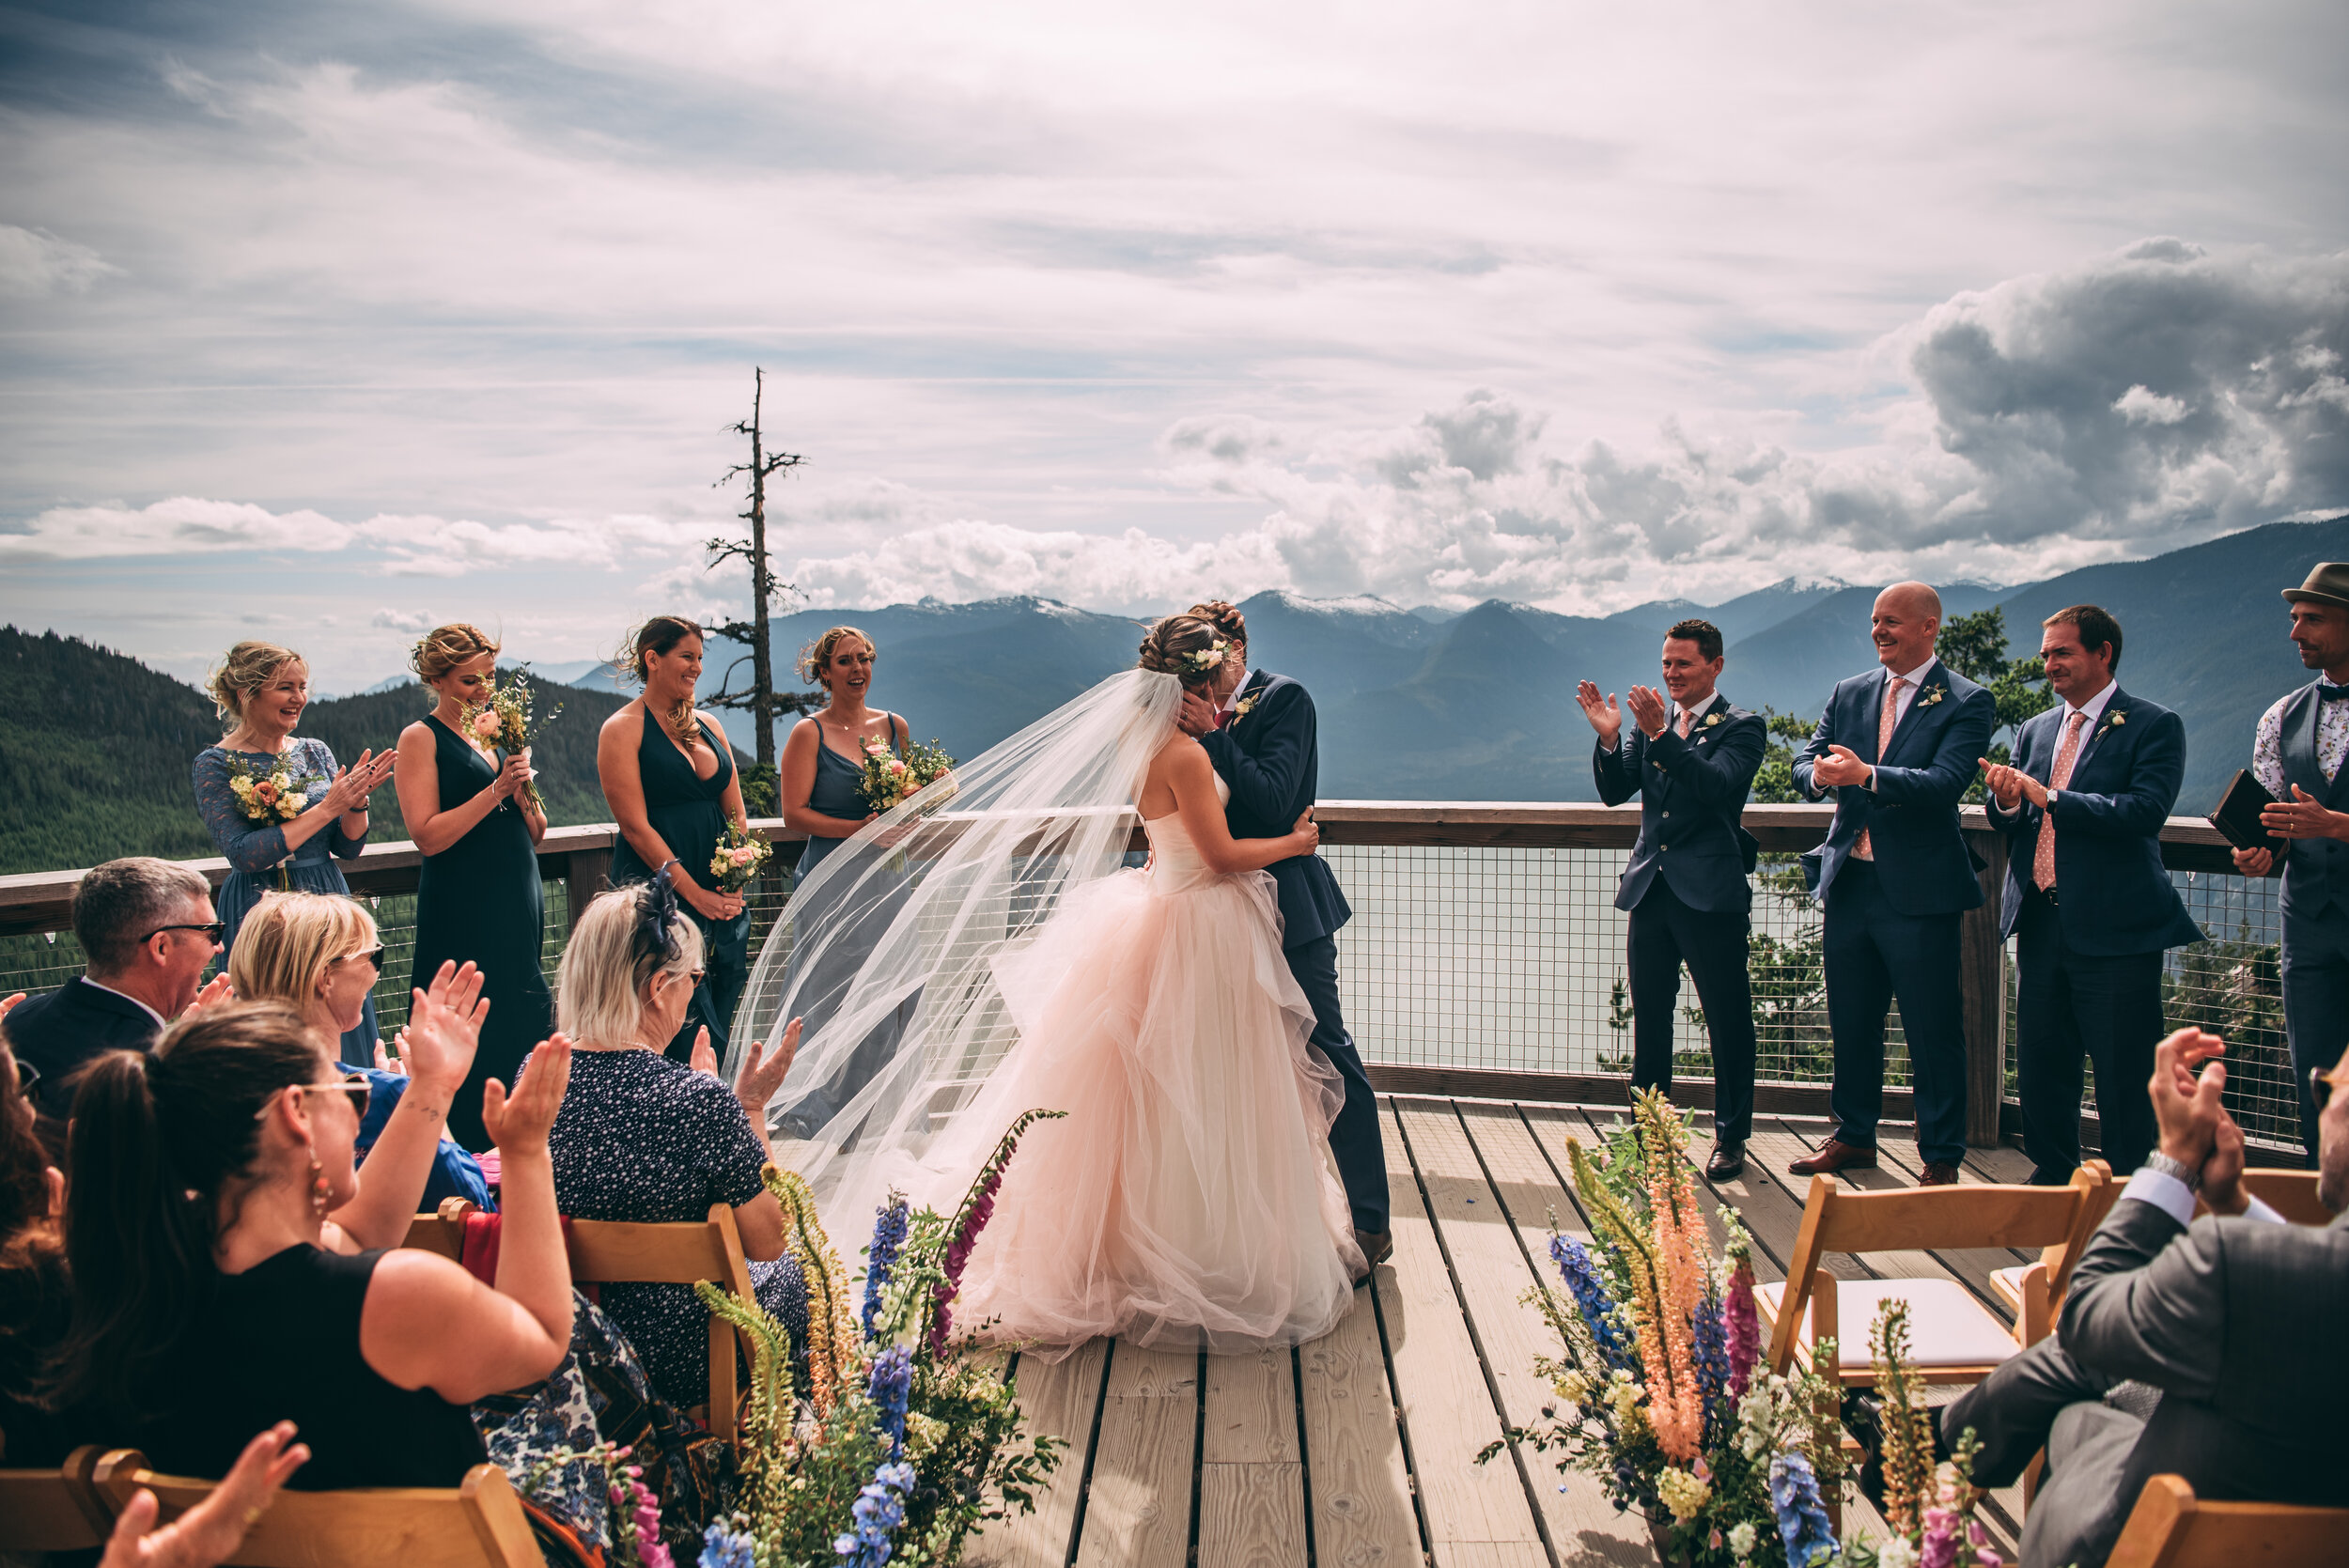 Hayley & Jon Sea to Sky Gondola Wedding - June 17, 2019 - Laura Olson Photography - Sea to Sky Wedding Photographer-2802.jpg